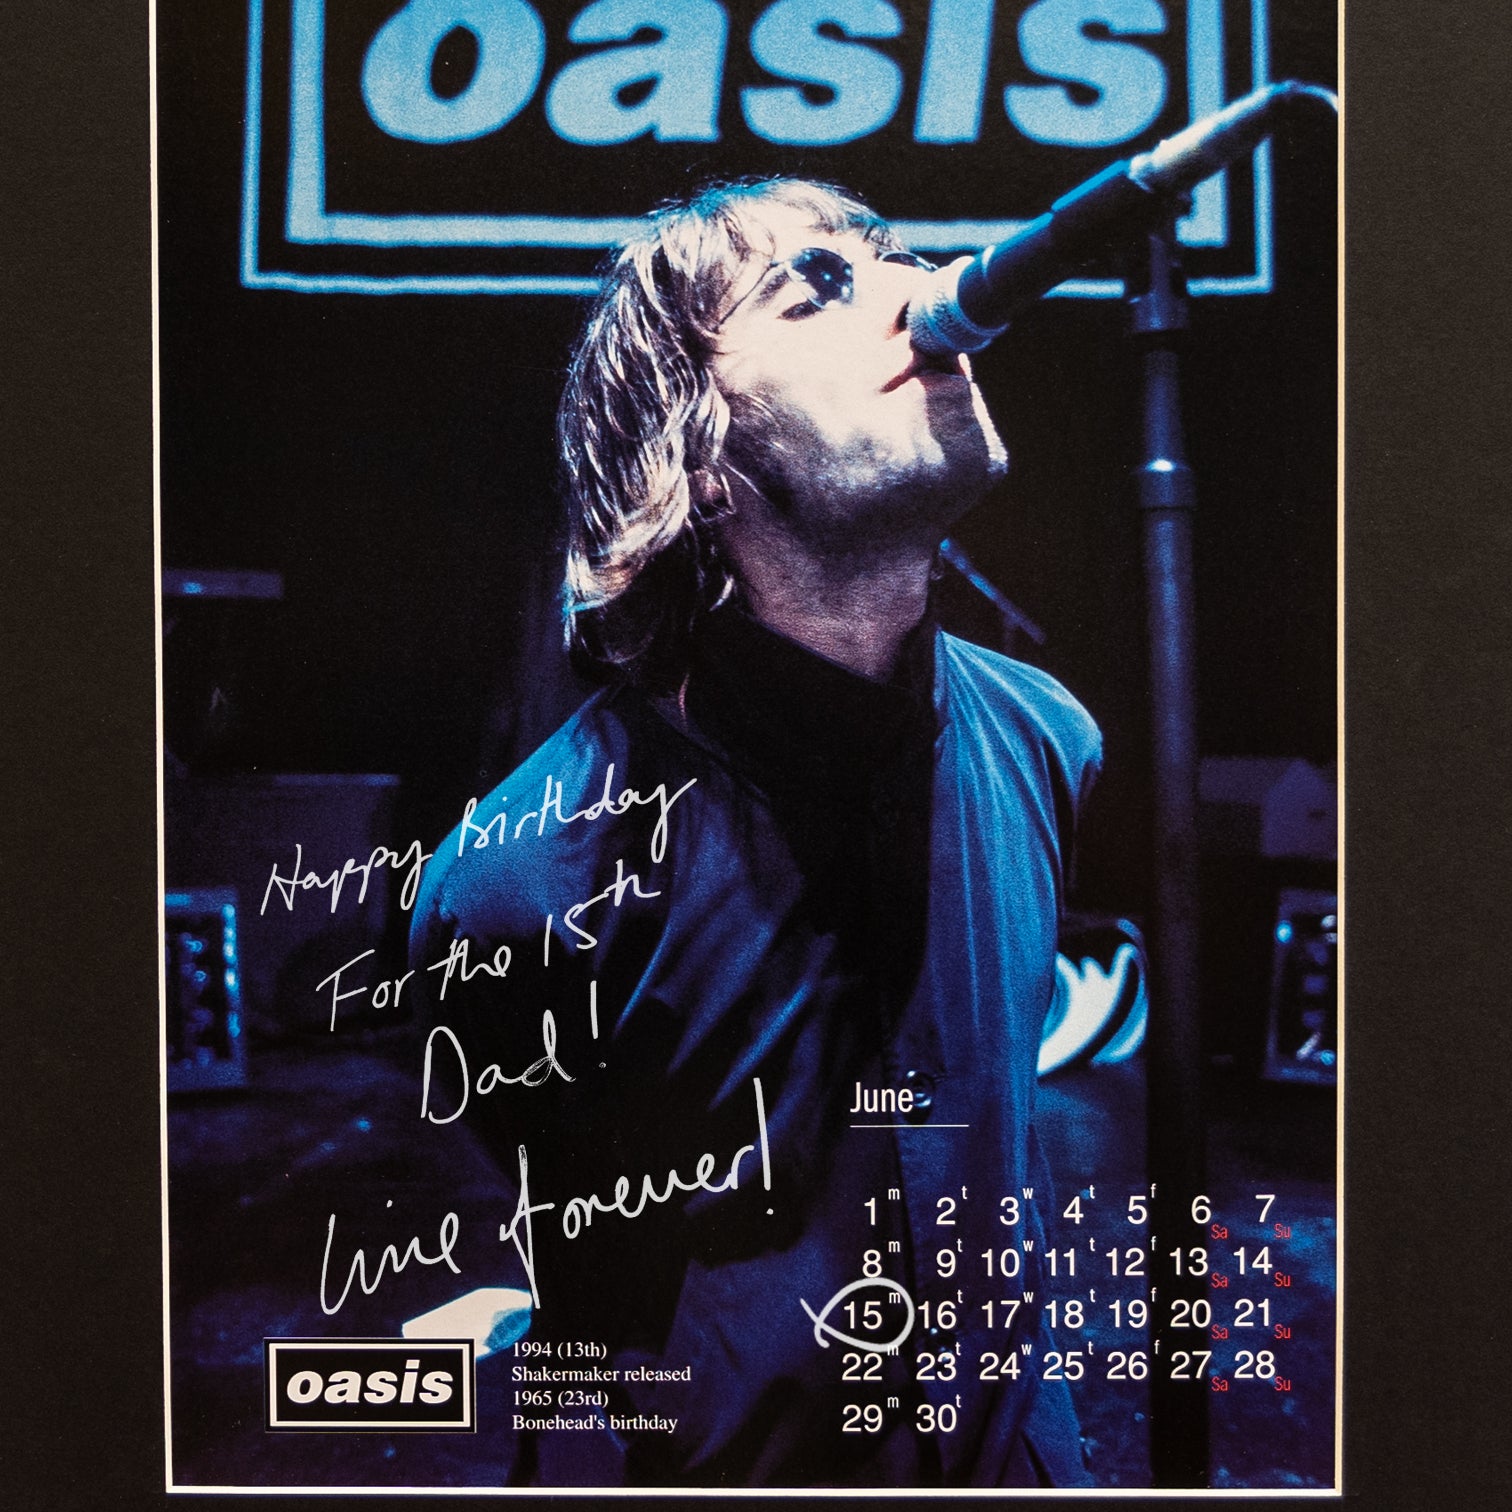 Oasis - October Personalised Calendar.